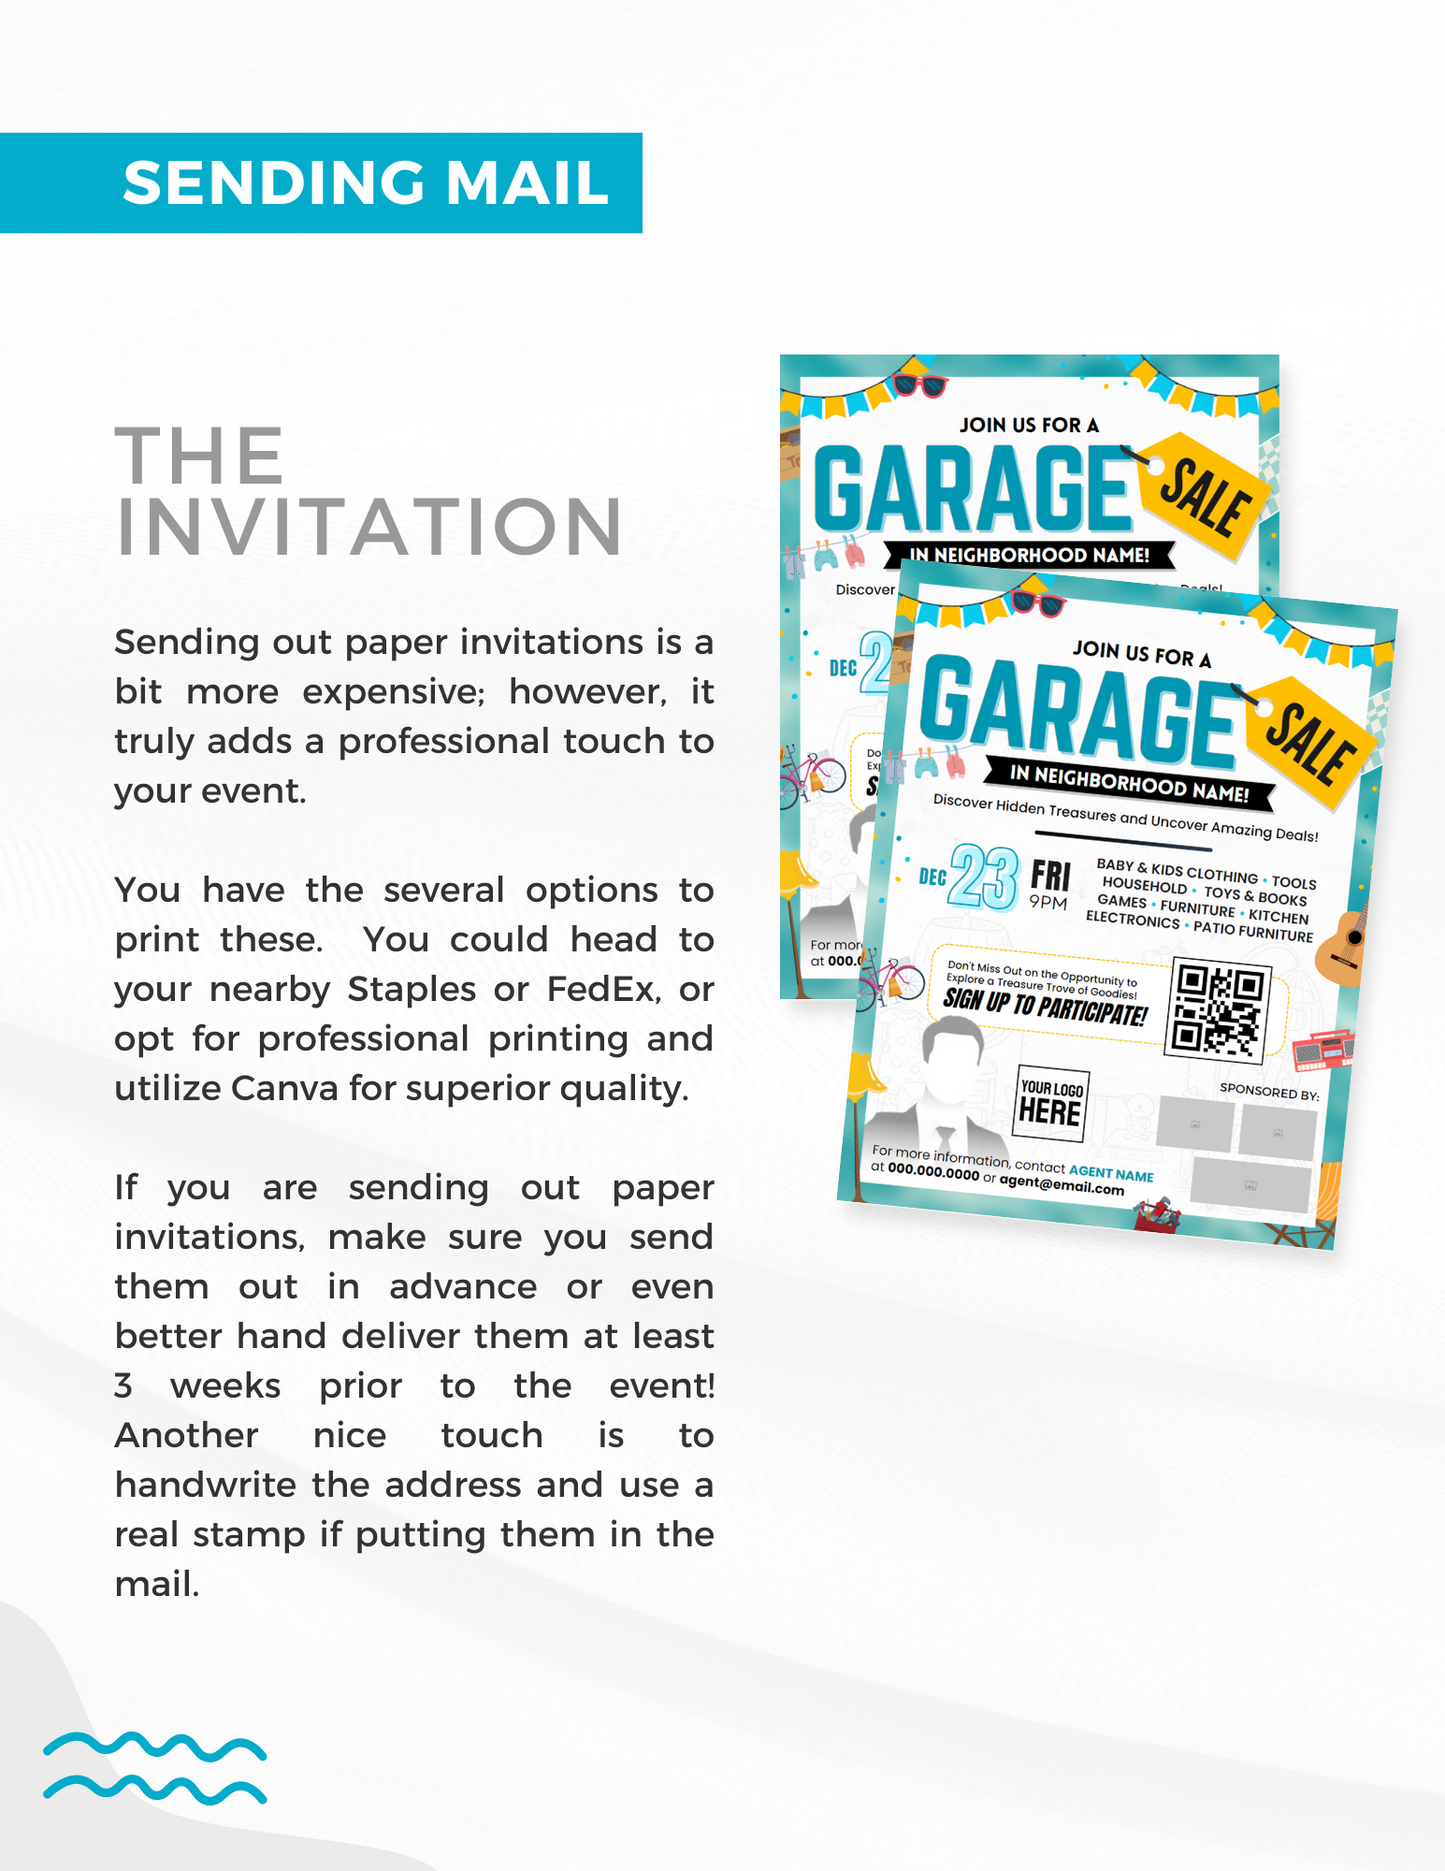 Community Garage Sale -  Agent Event Guide